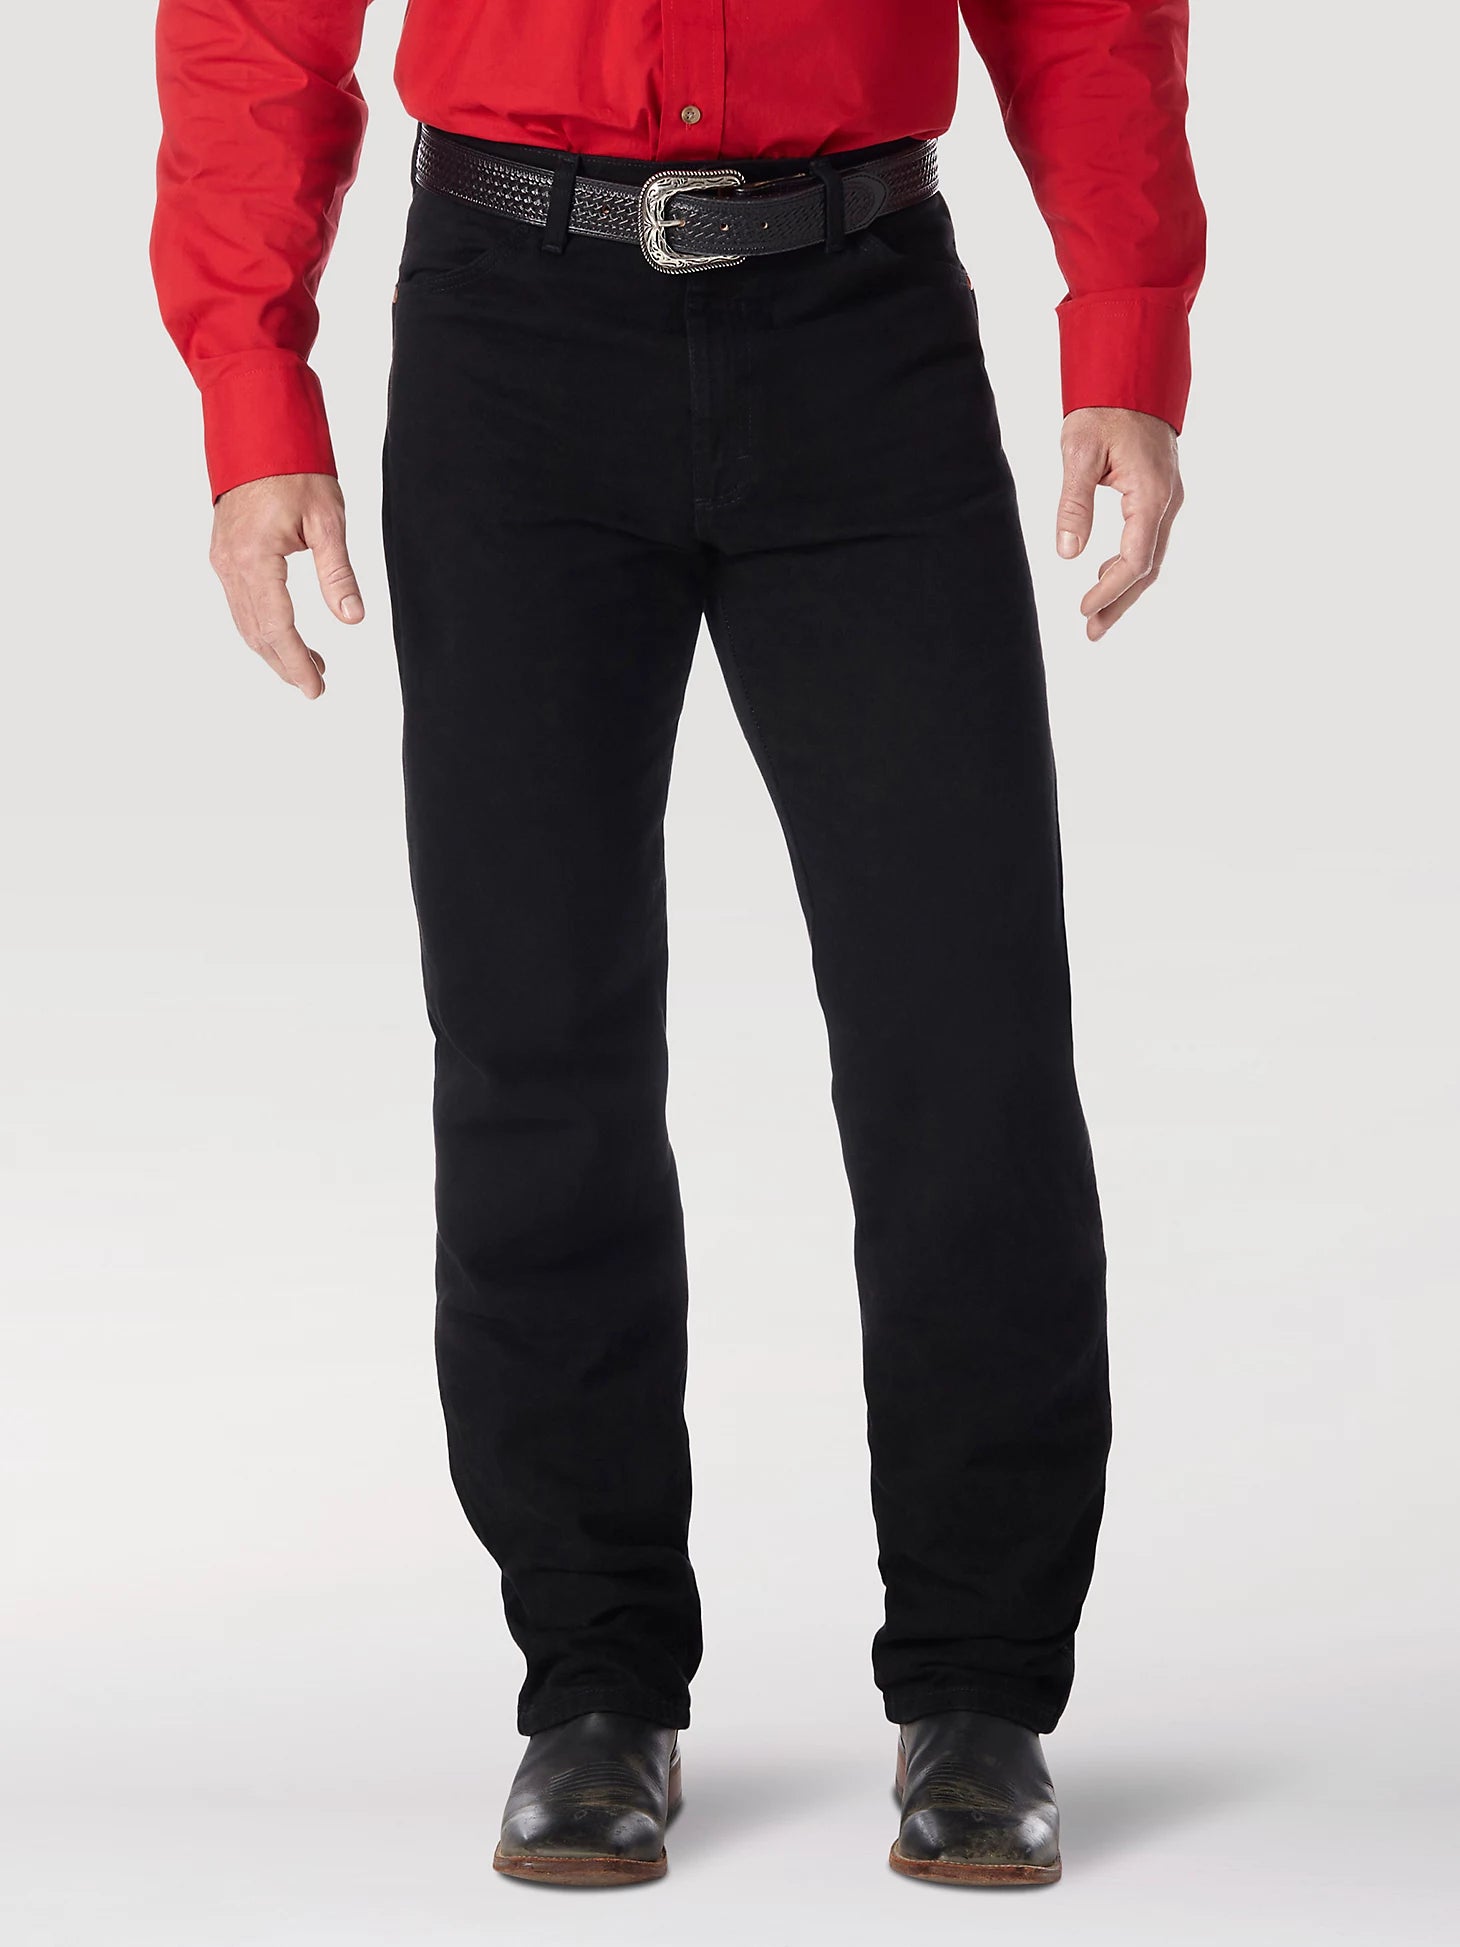 Jeans Wrangler Original Fit Shadow Black Caballero